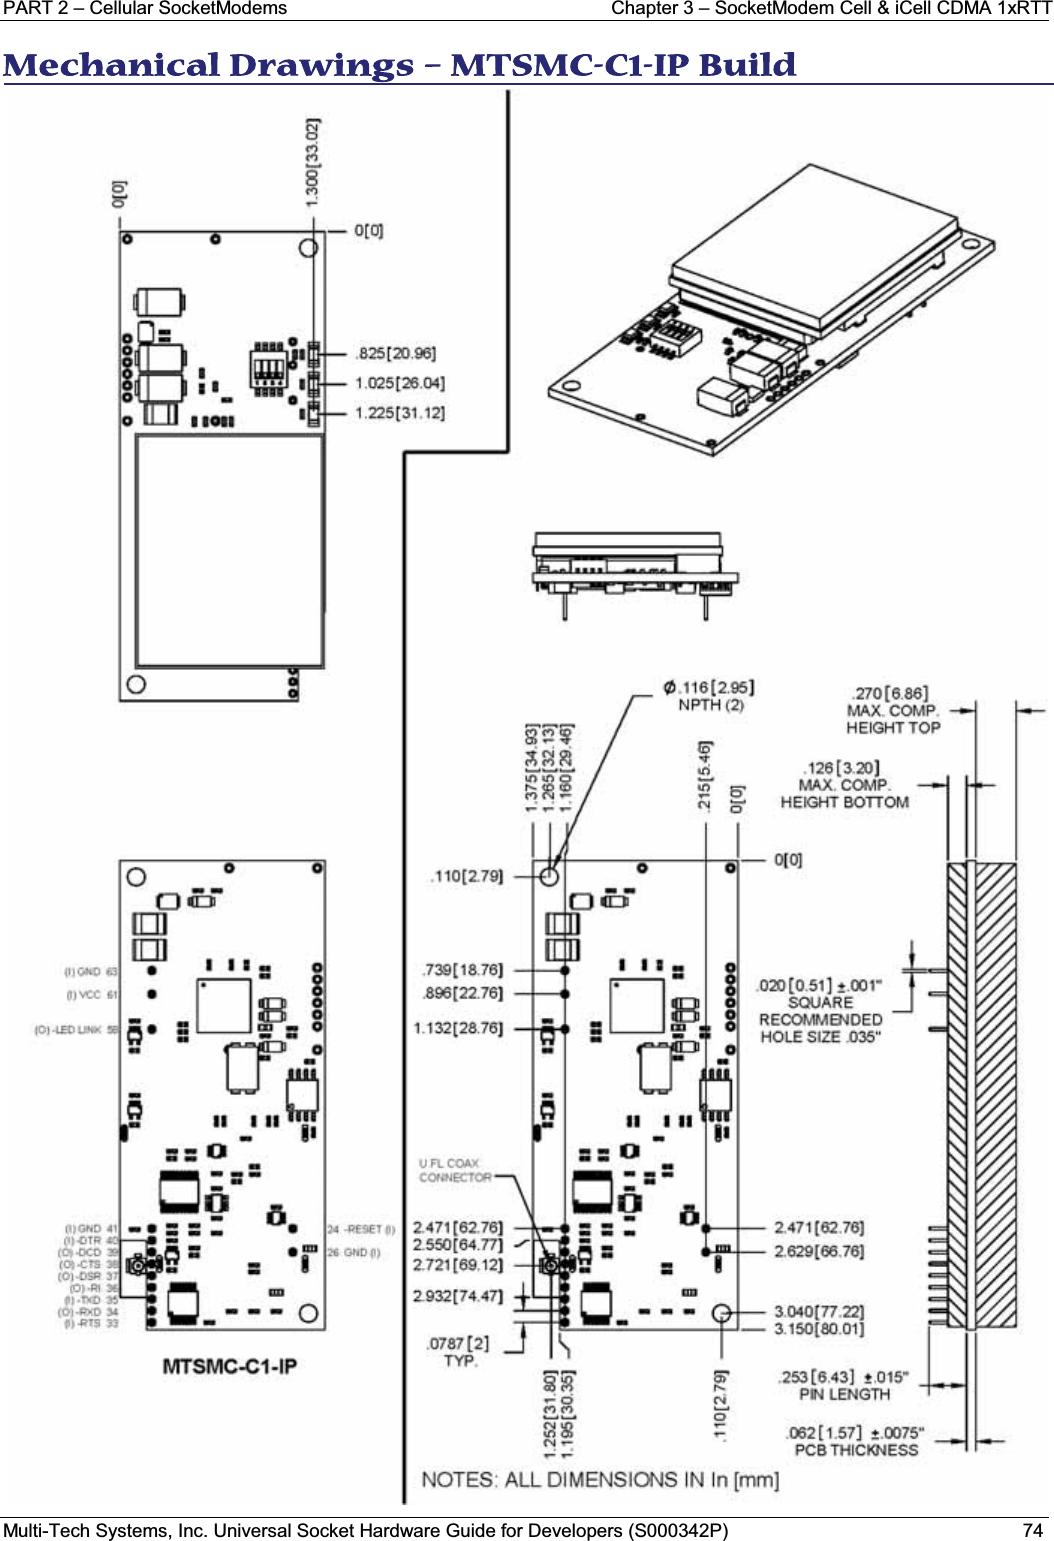 PART 2 – Cellular SocketModems Chapter 3 – SocketModem Cell &amp; iCell CDMA 1xRTT Multi-Tech Systems, Inc. Universal Socket Hardware Guide for Developers (S000342P) 74MMechanical Drawings – MTSMC-C1-IP Build 